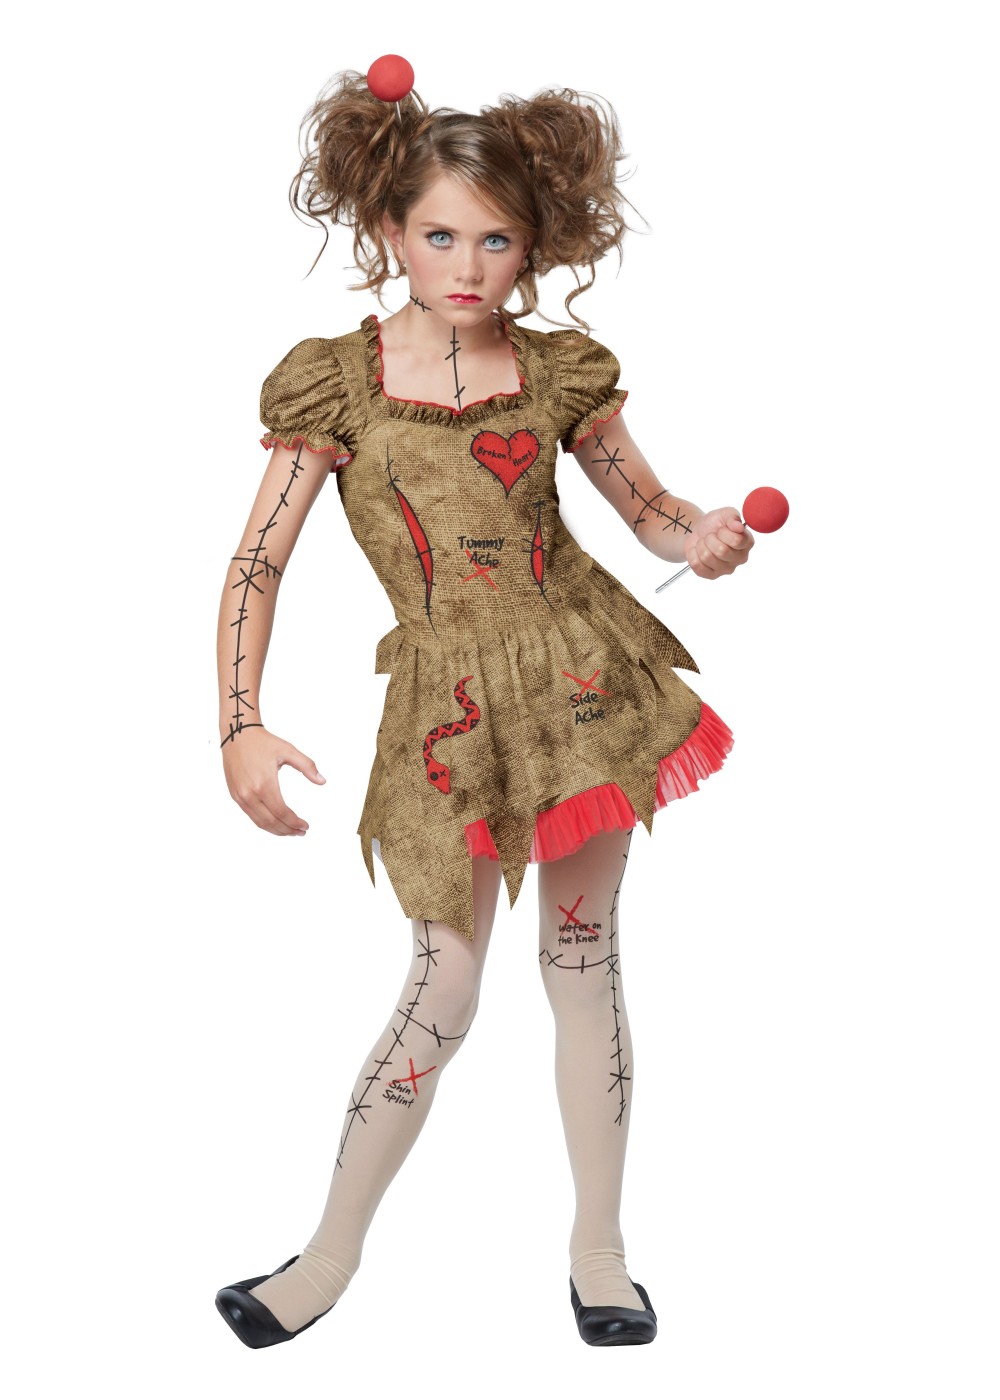 Voodoo Dolly Tween Costume - Scary Costumes